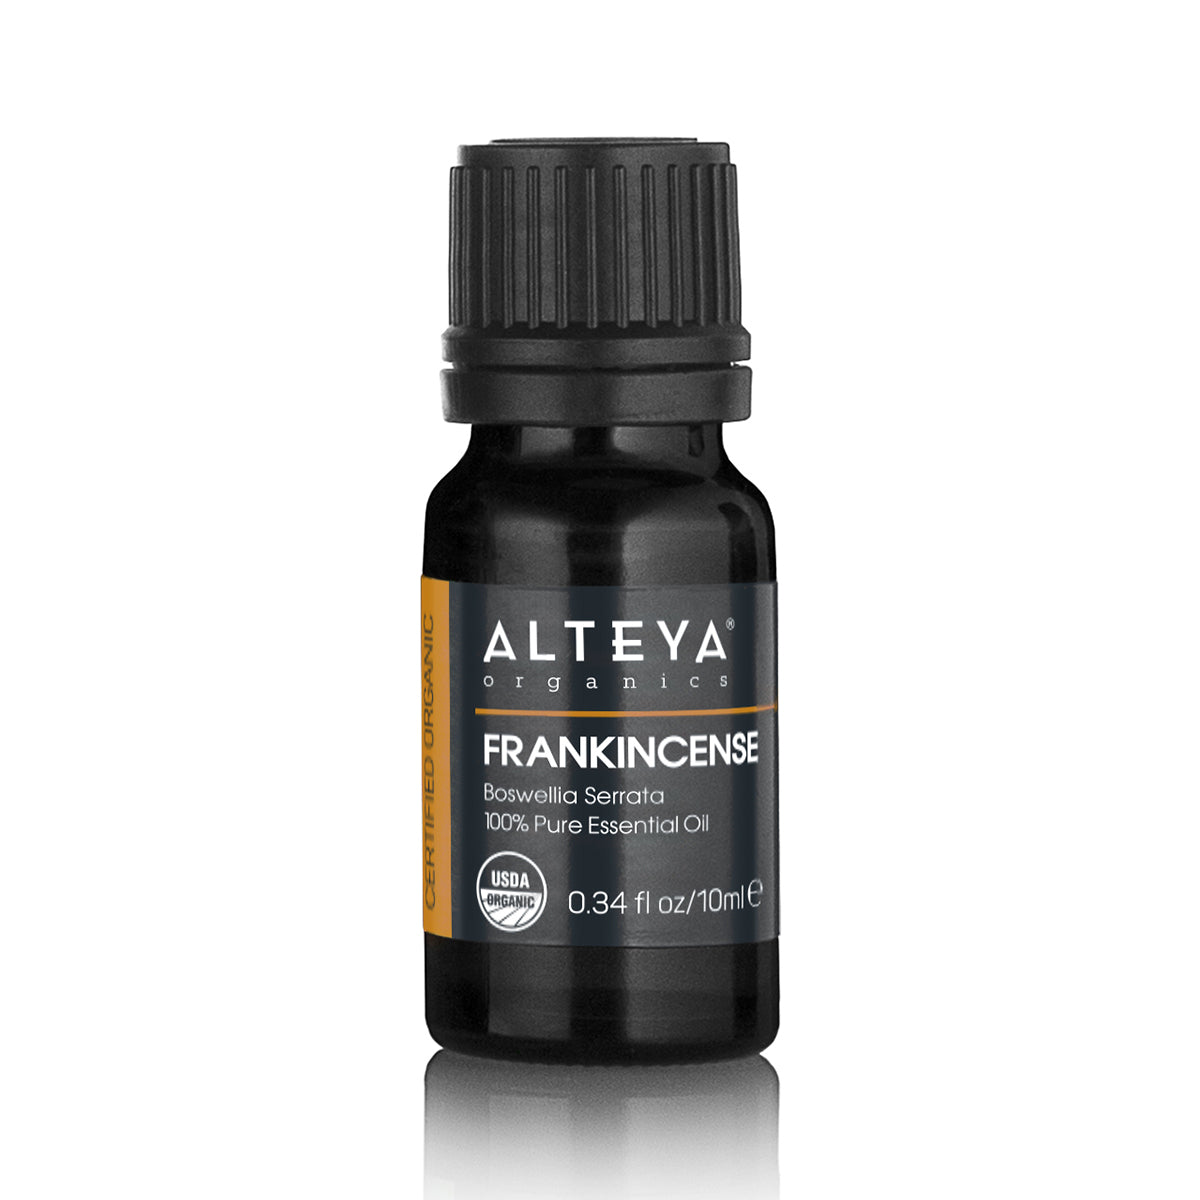 A bottle of Alteya Organics Indian Frankincense (Boswellia Serrata) essential oil.